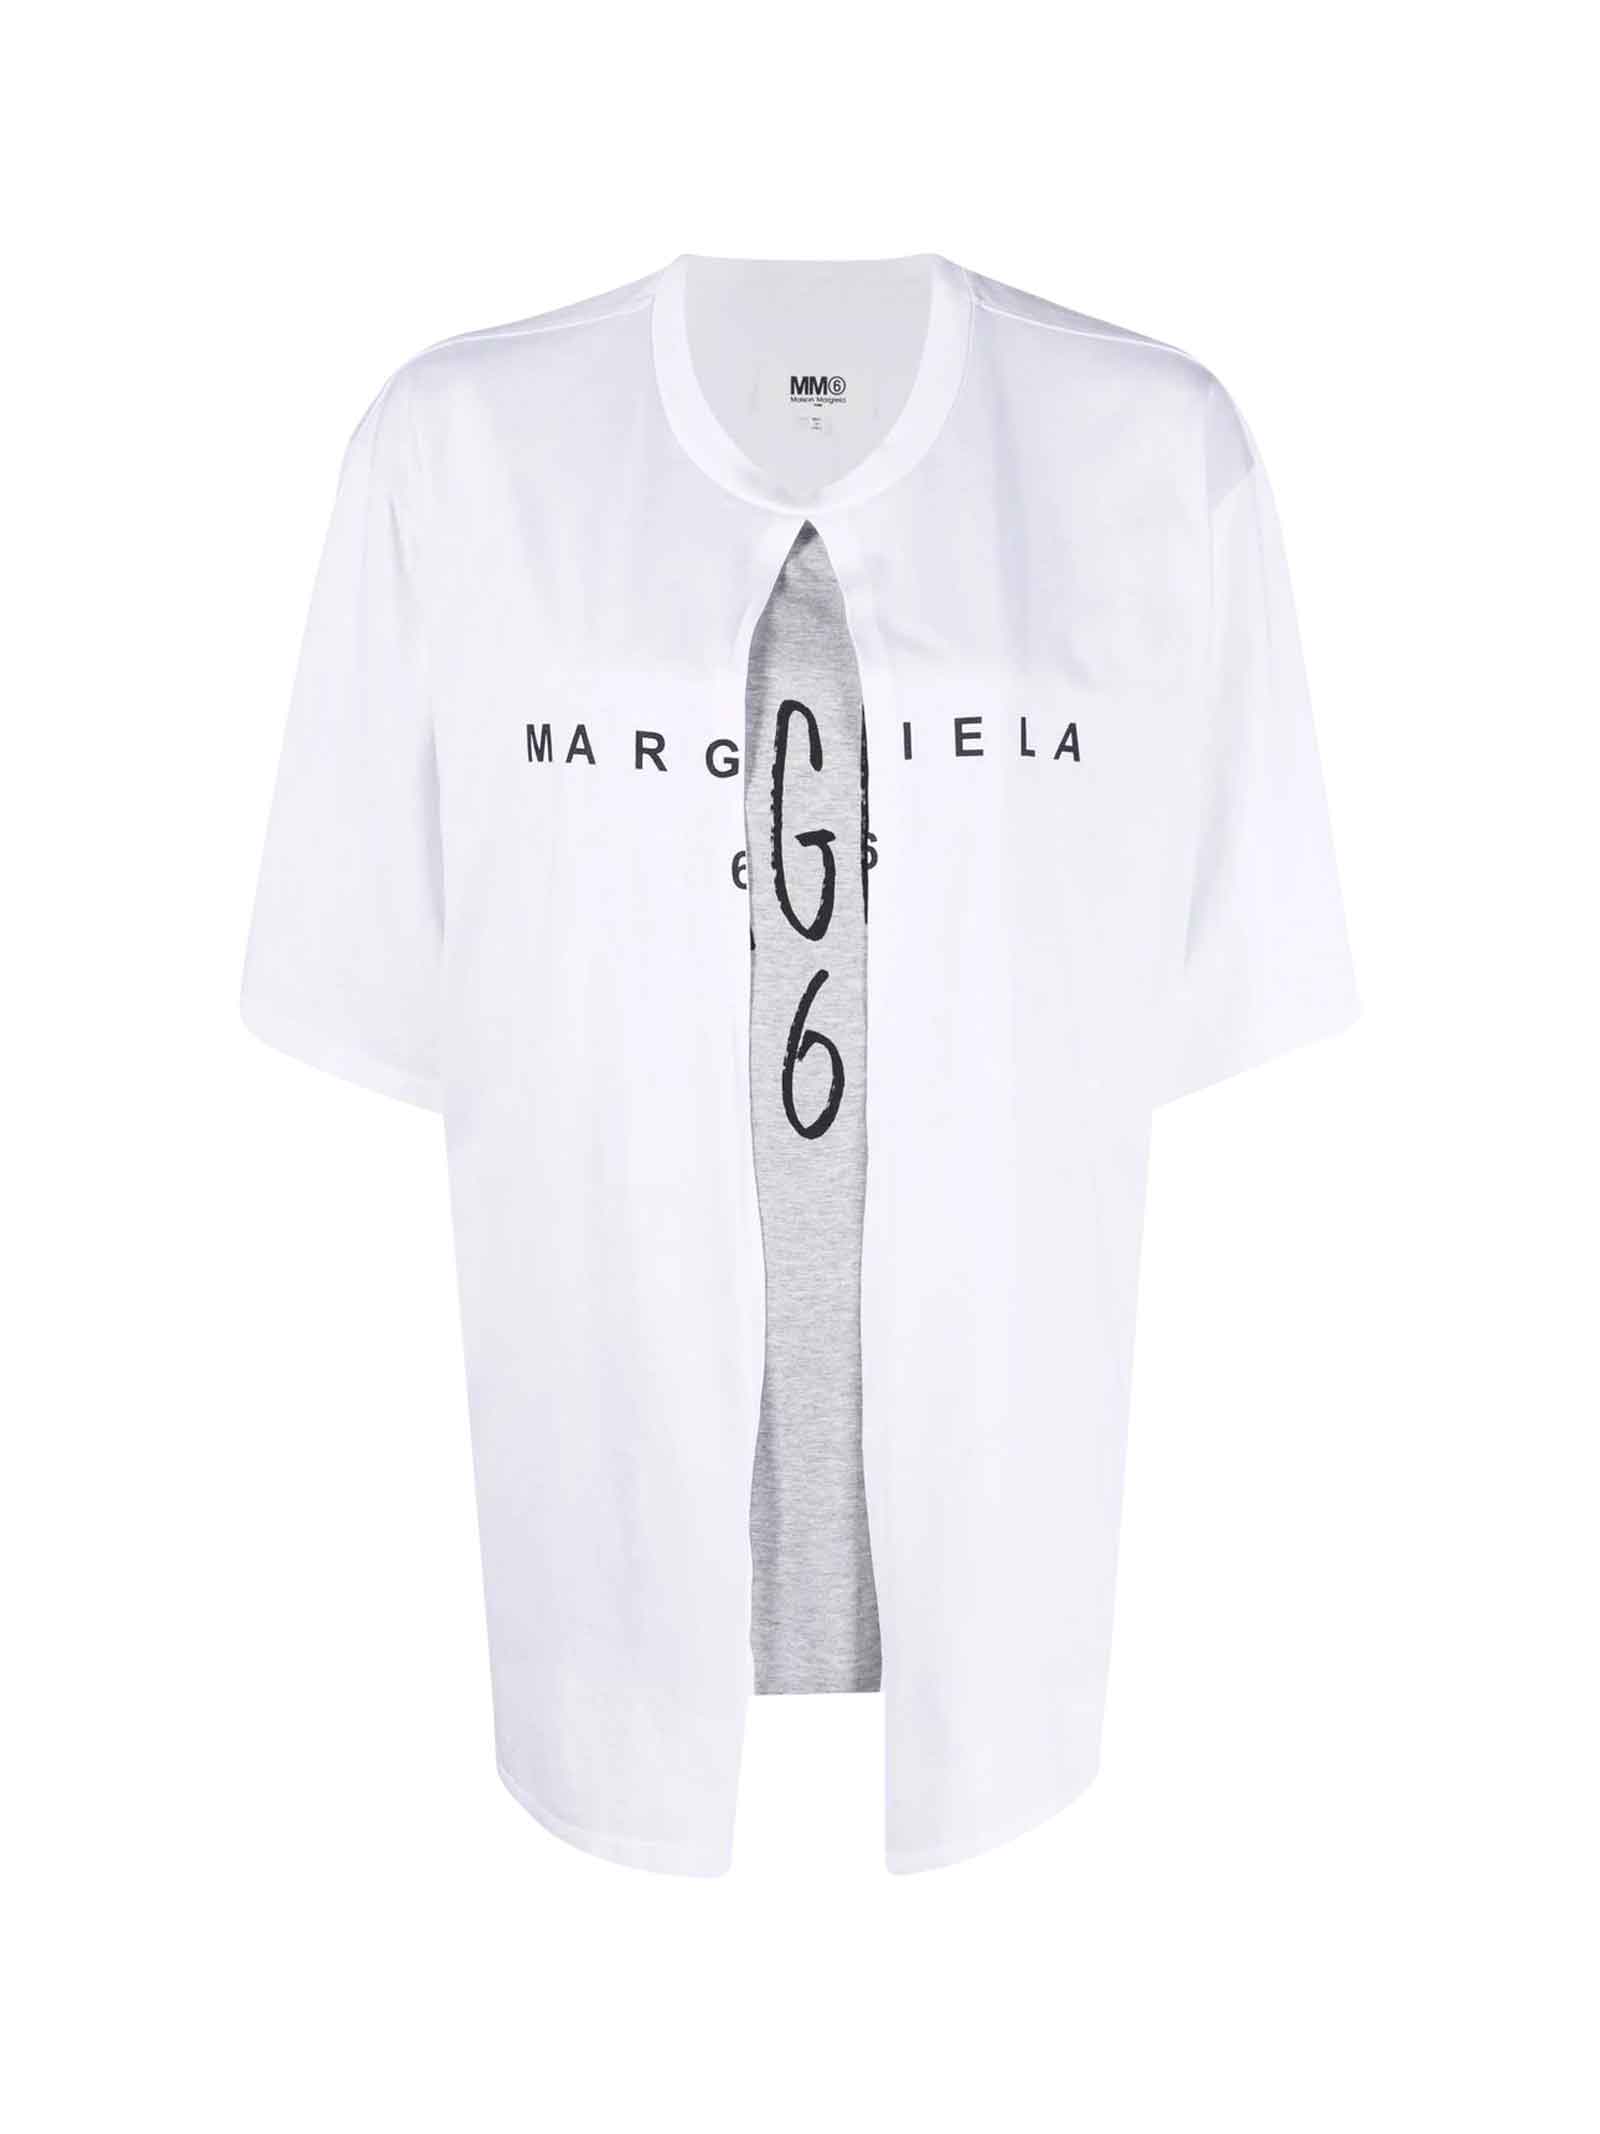 MM6 Maison Margiela Maison Margiela Womens White T-shirt